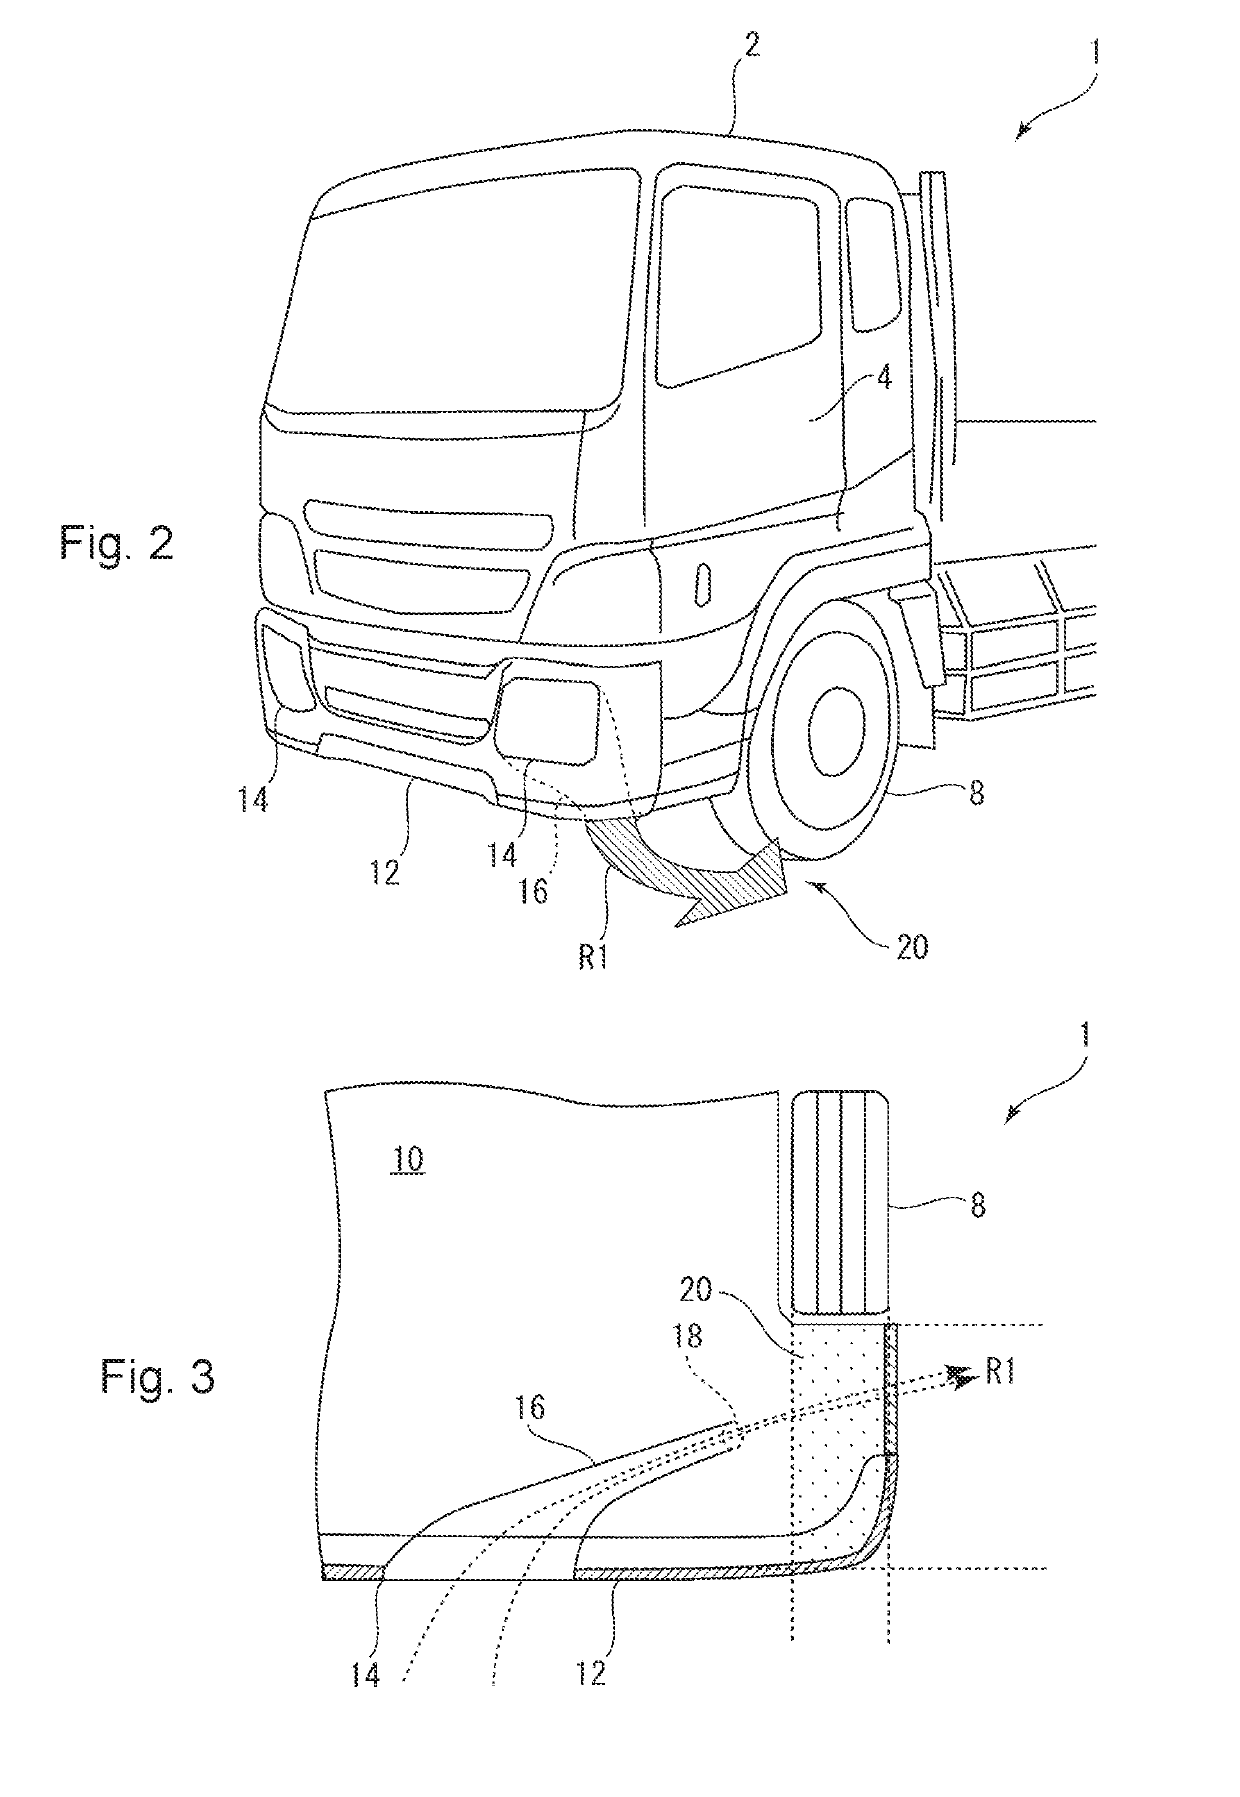 Flow Straightener of Vehicle